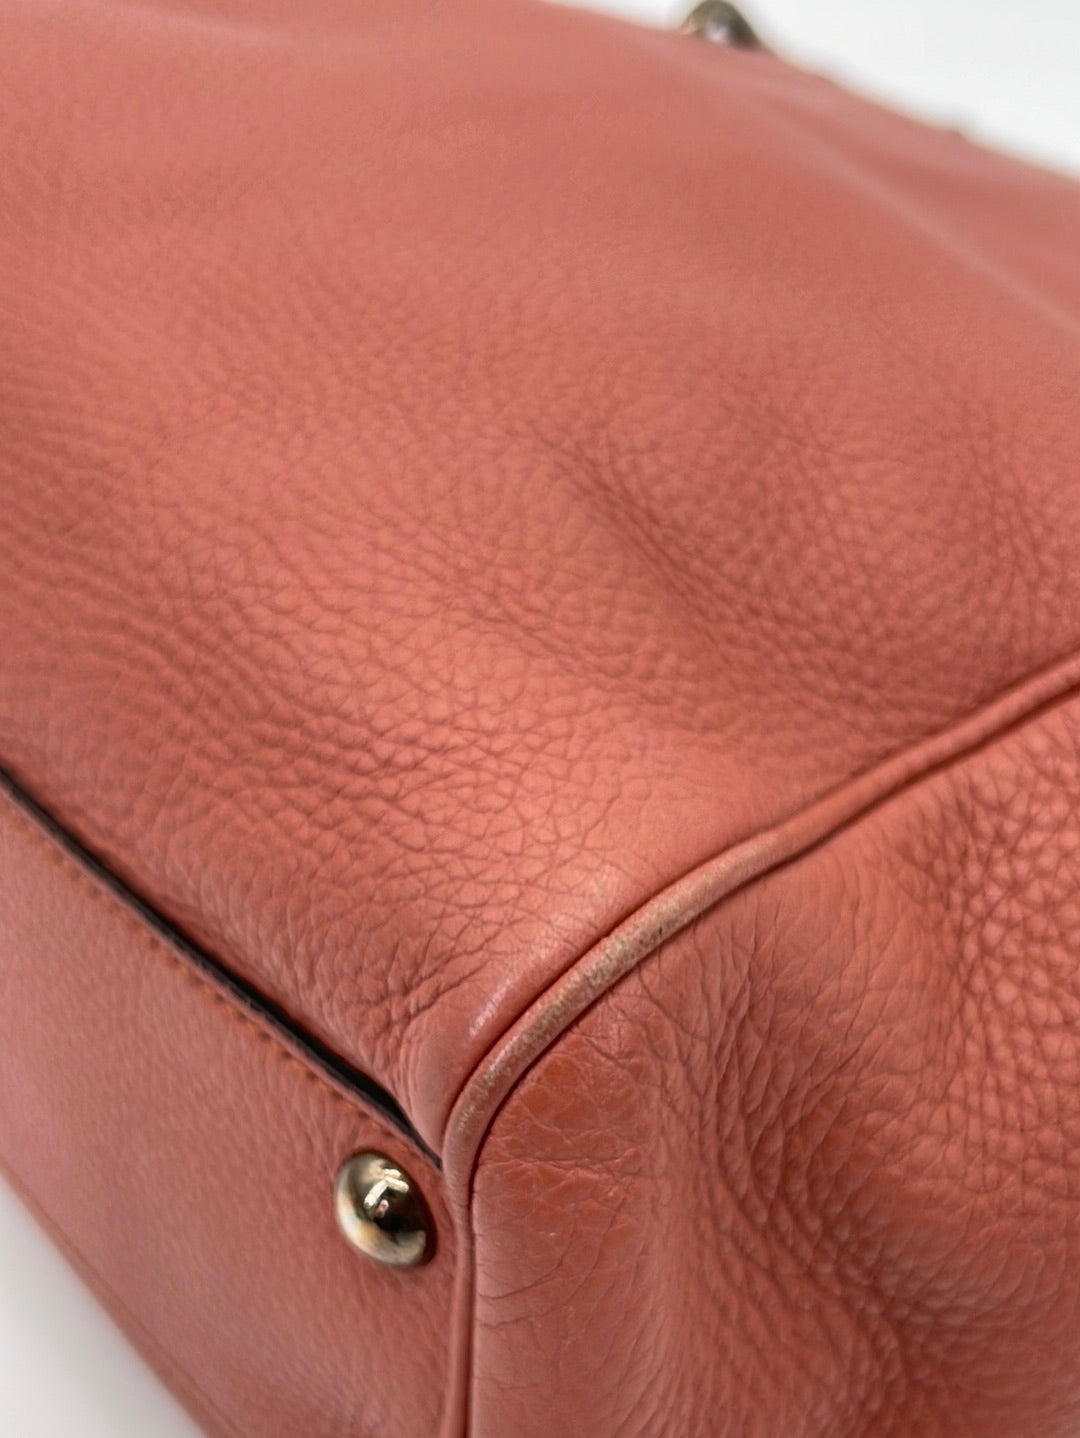 Preloved Gucci Bamboo Shopper Tote Coral Leather Medium 336032520981 062323 $200  Flashoff